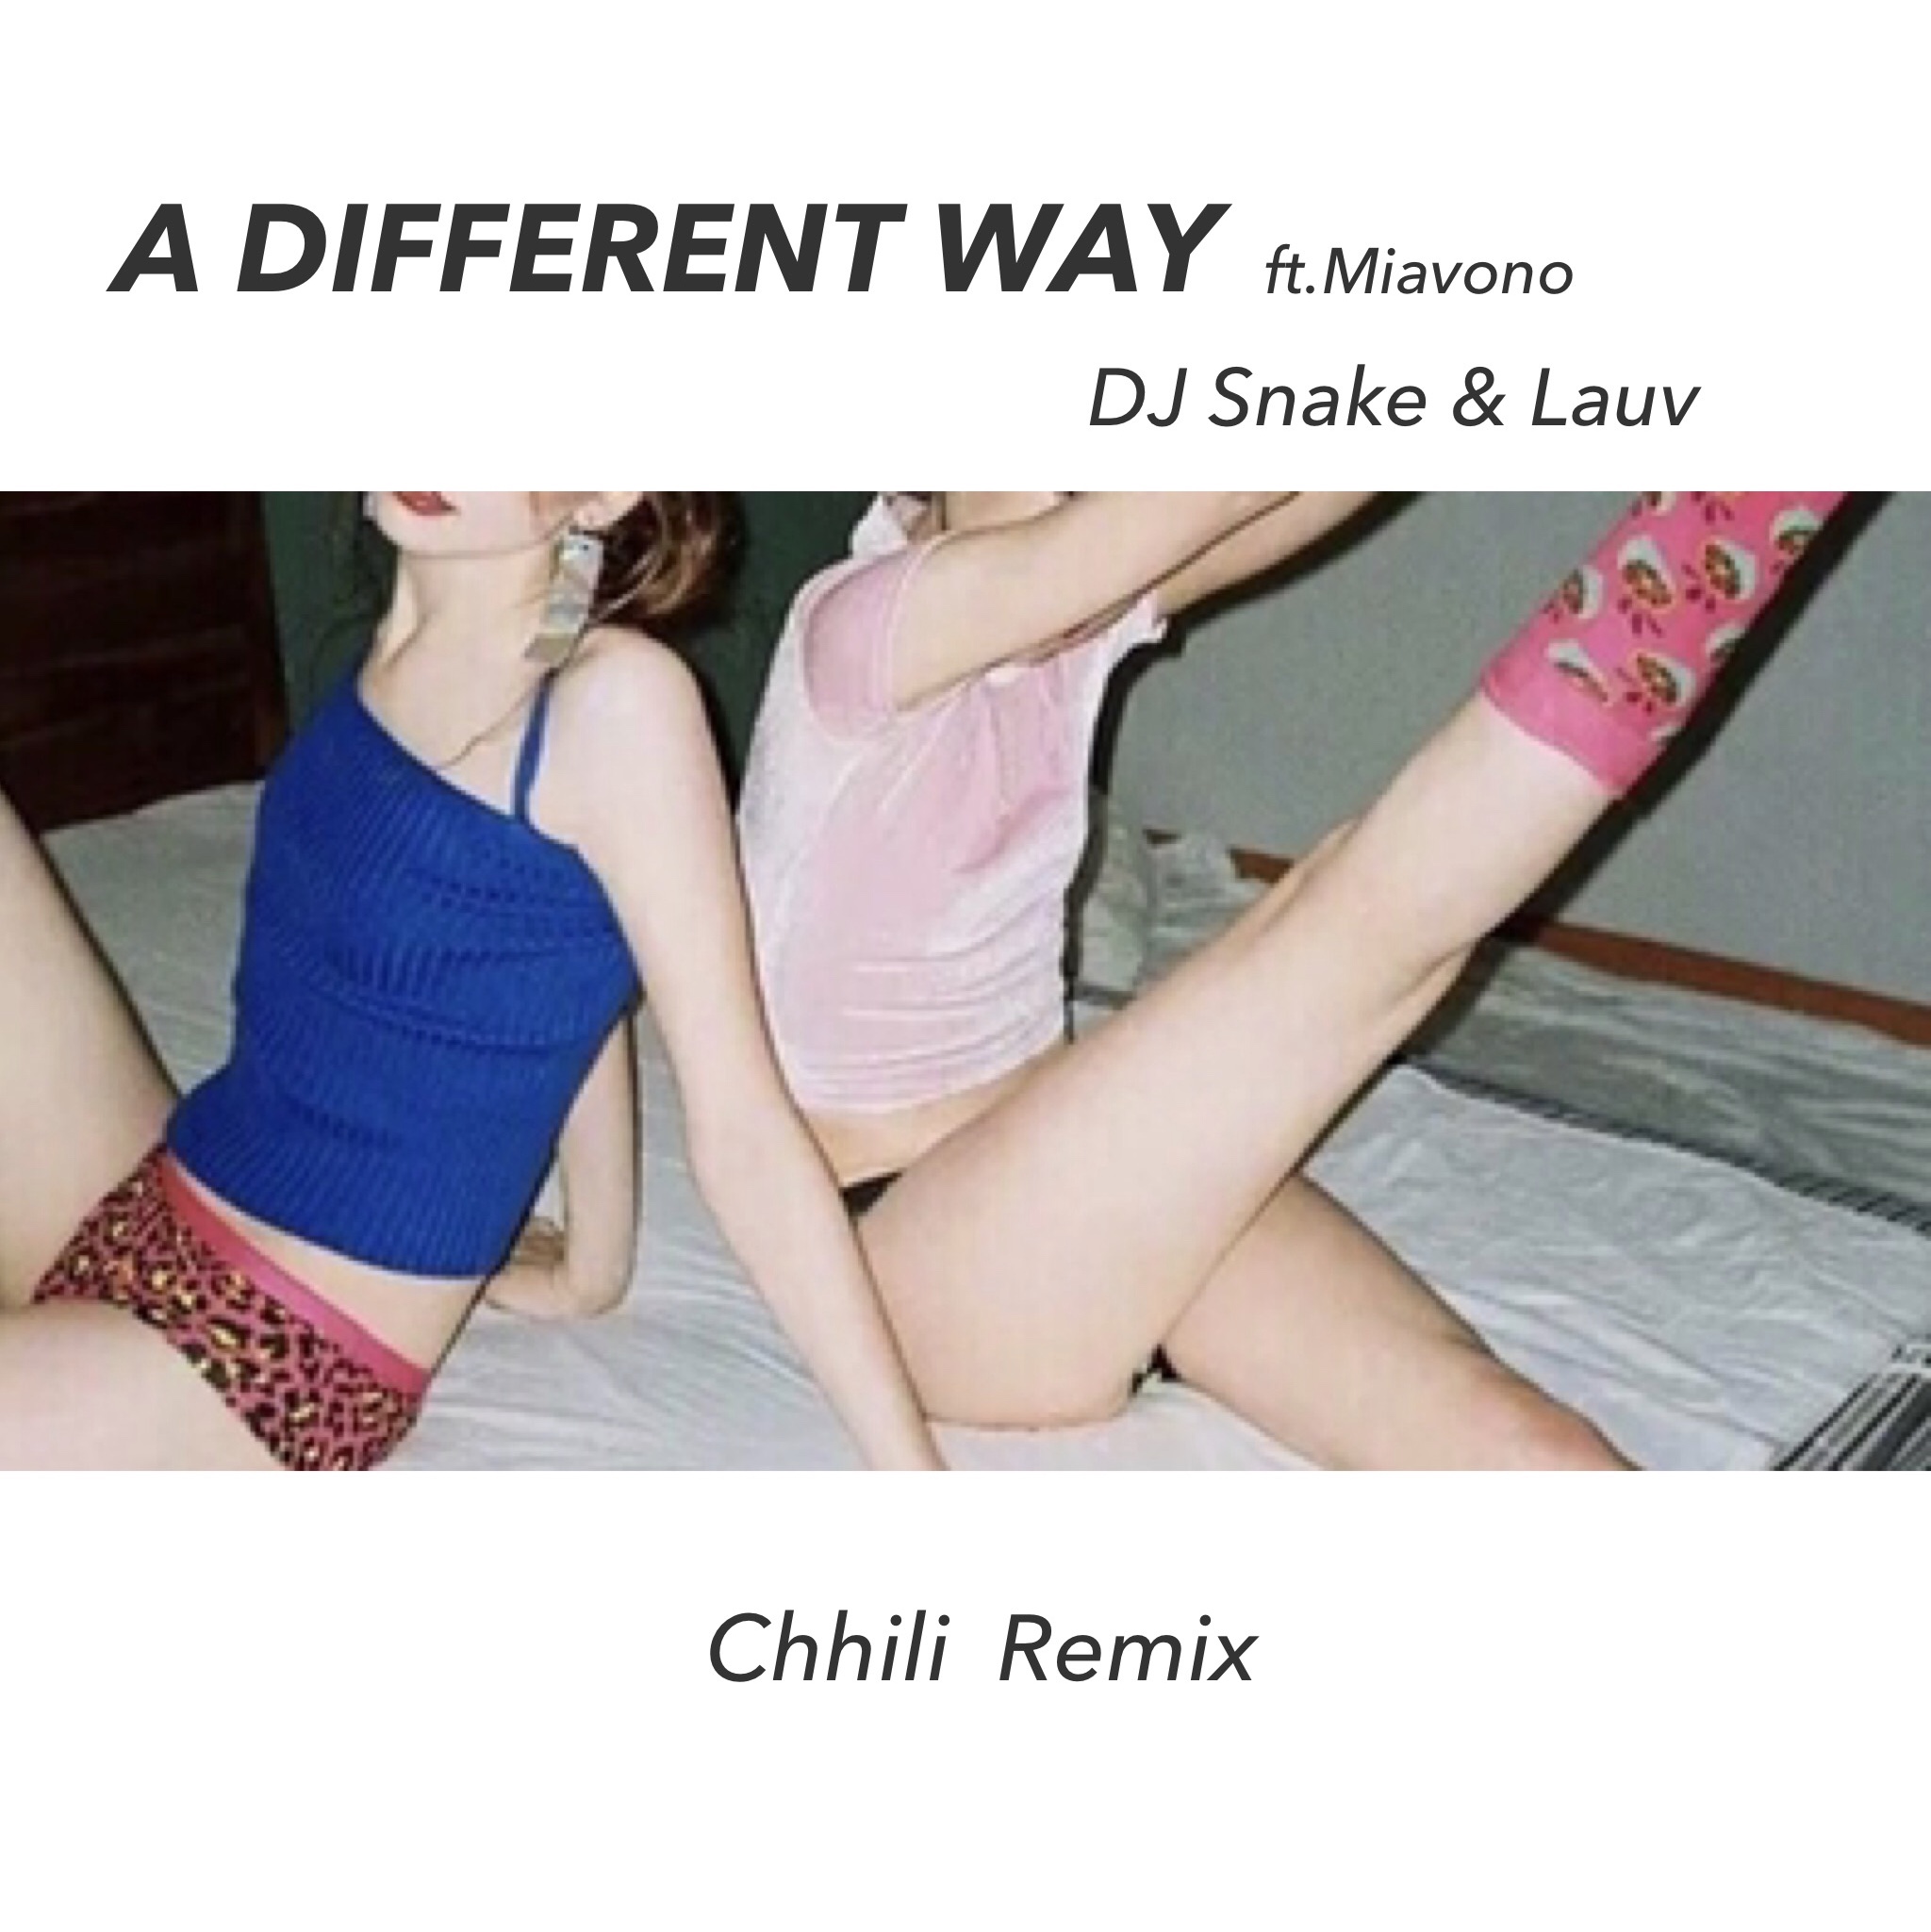 A Different Way (Chhili Remix)